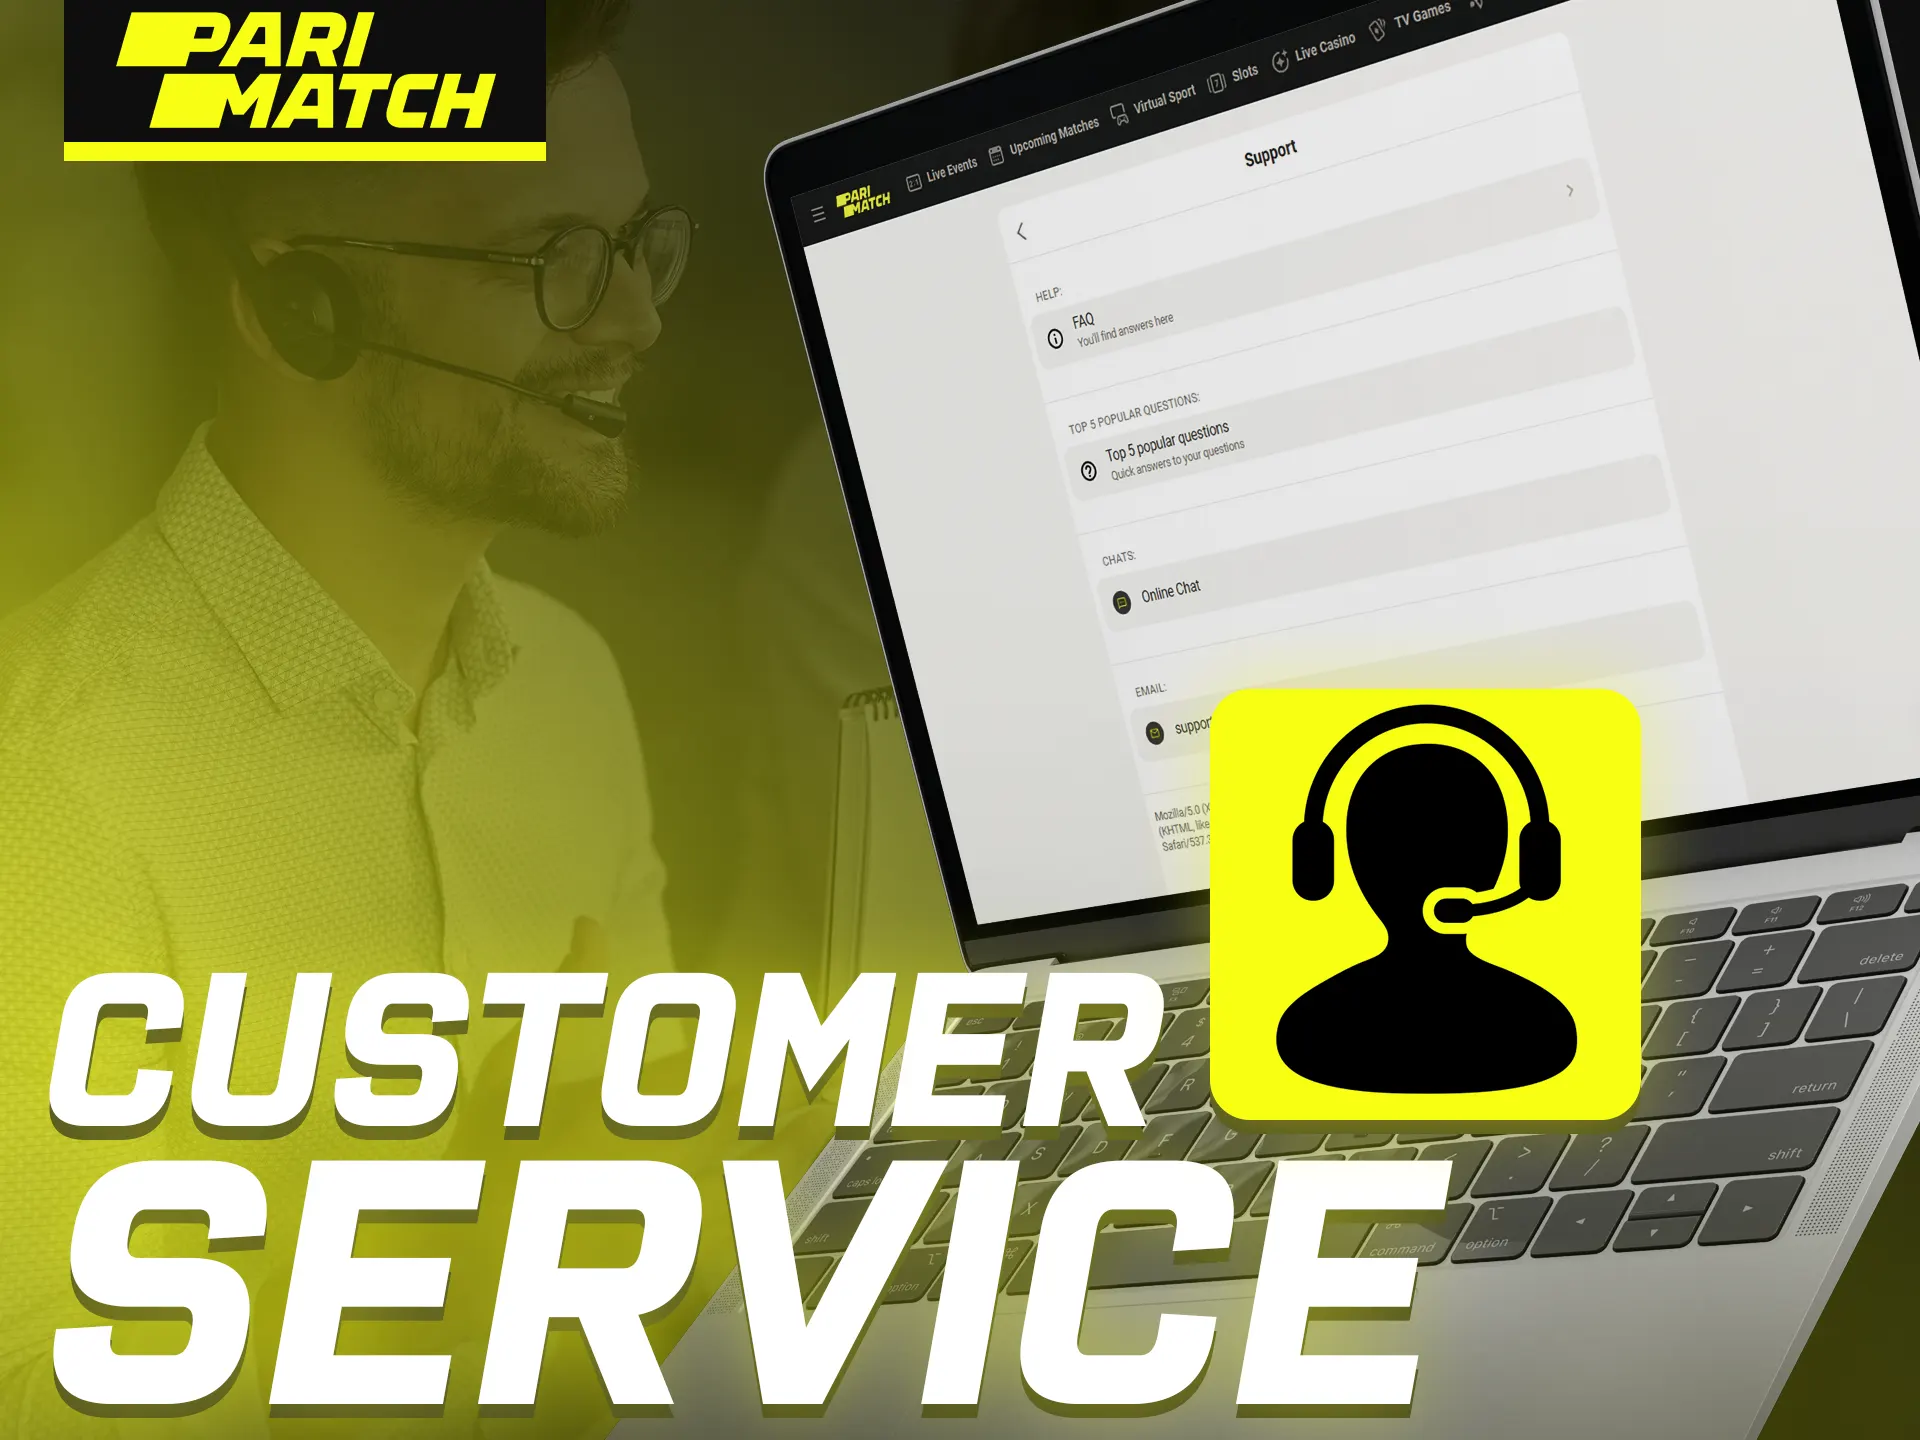 Contact the company through customer service.